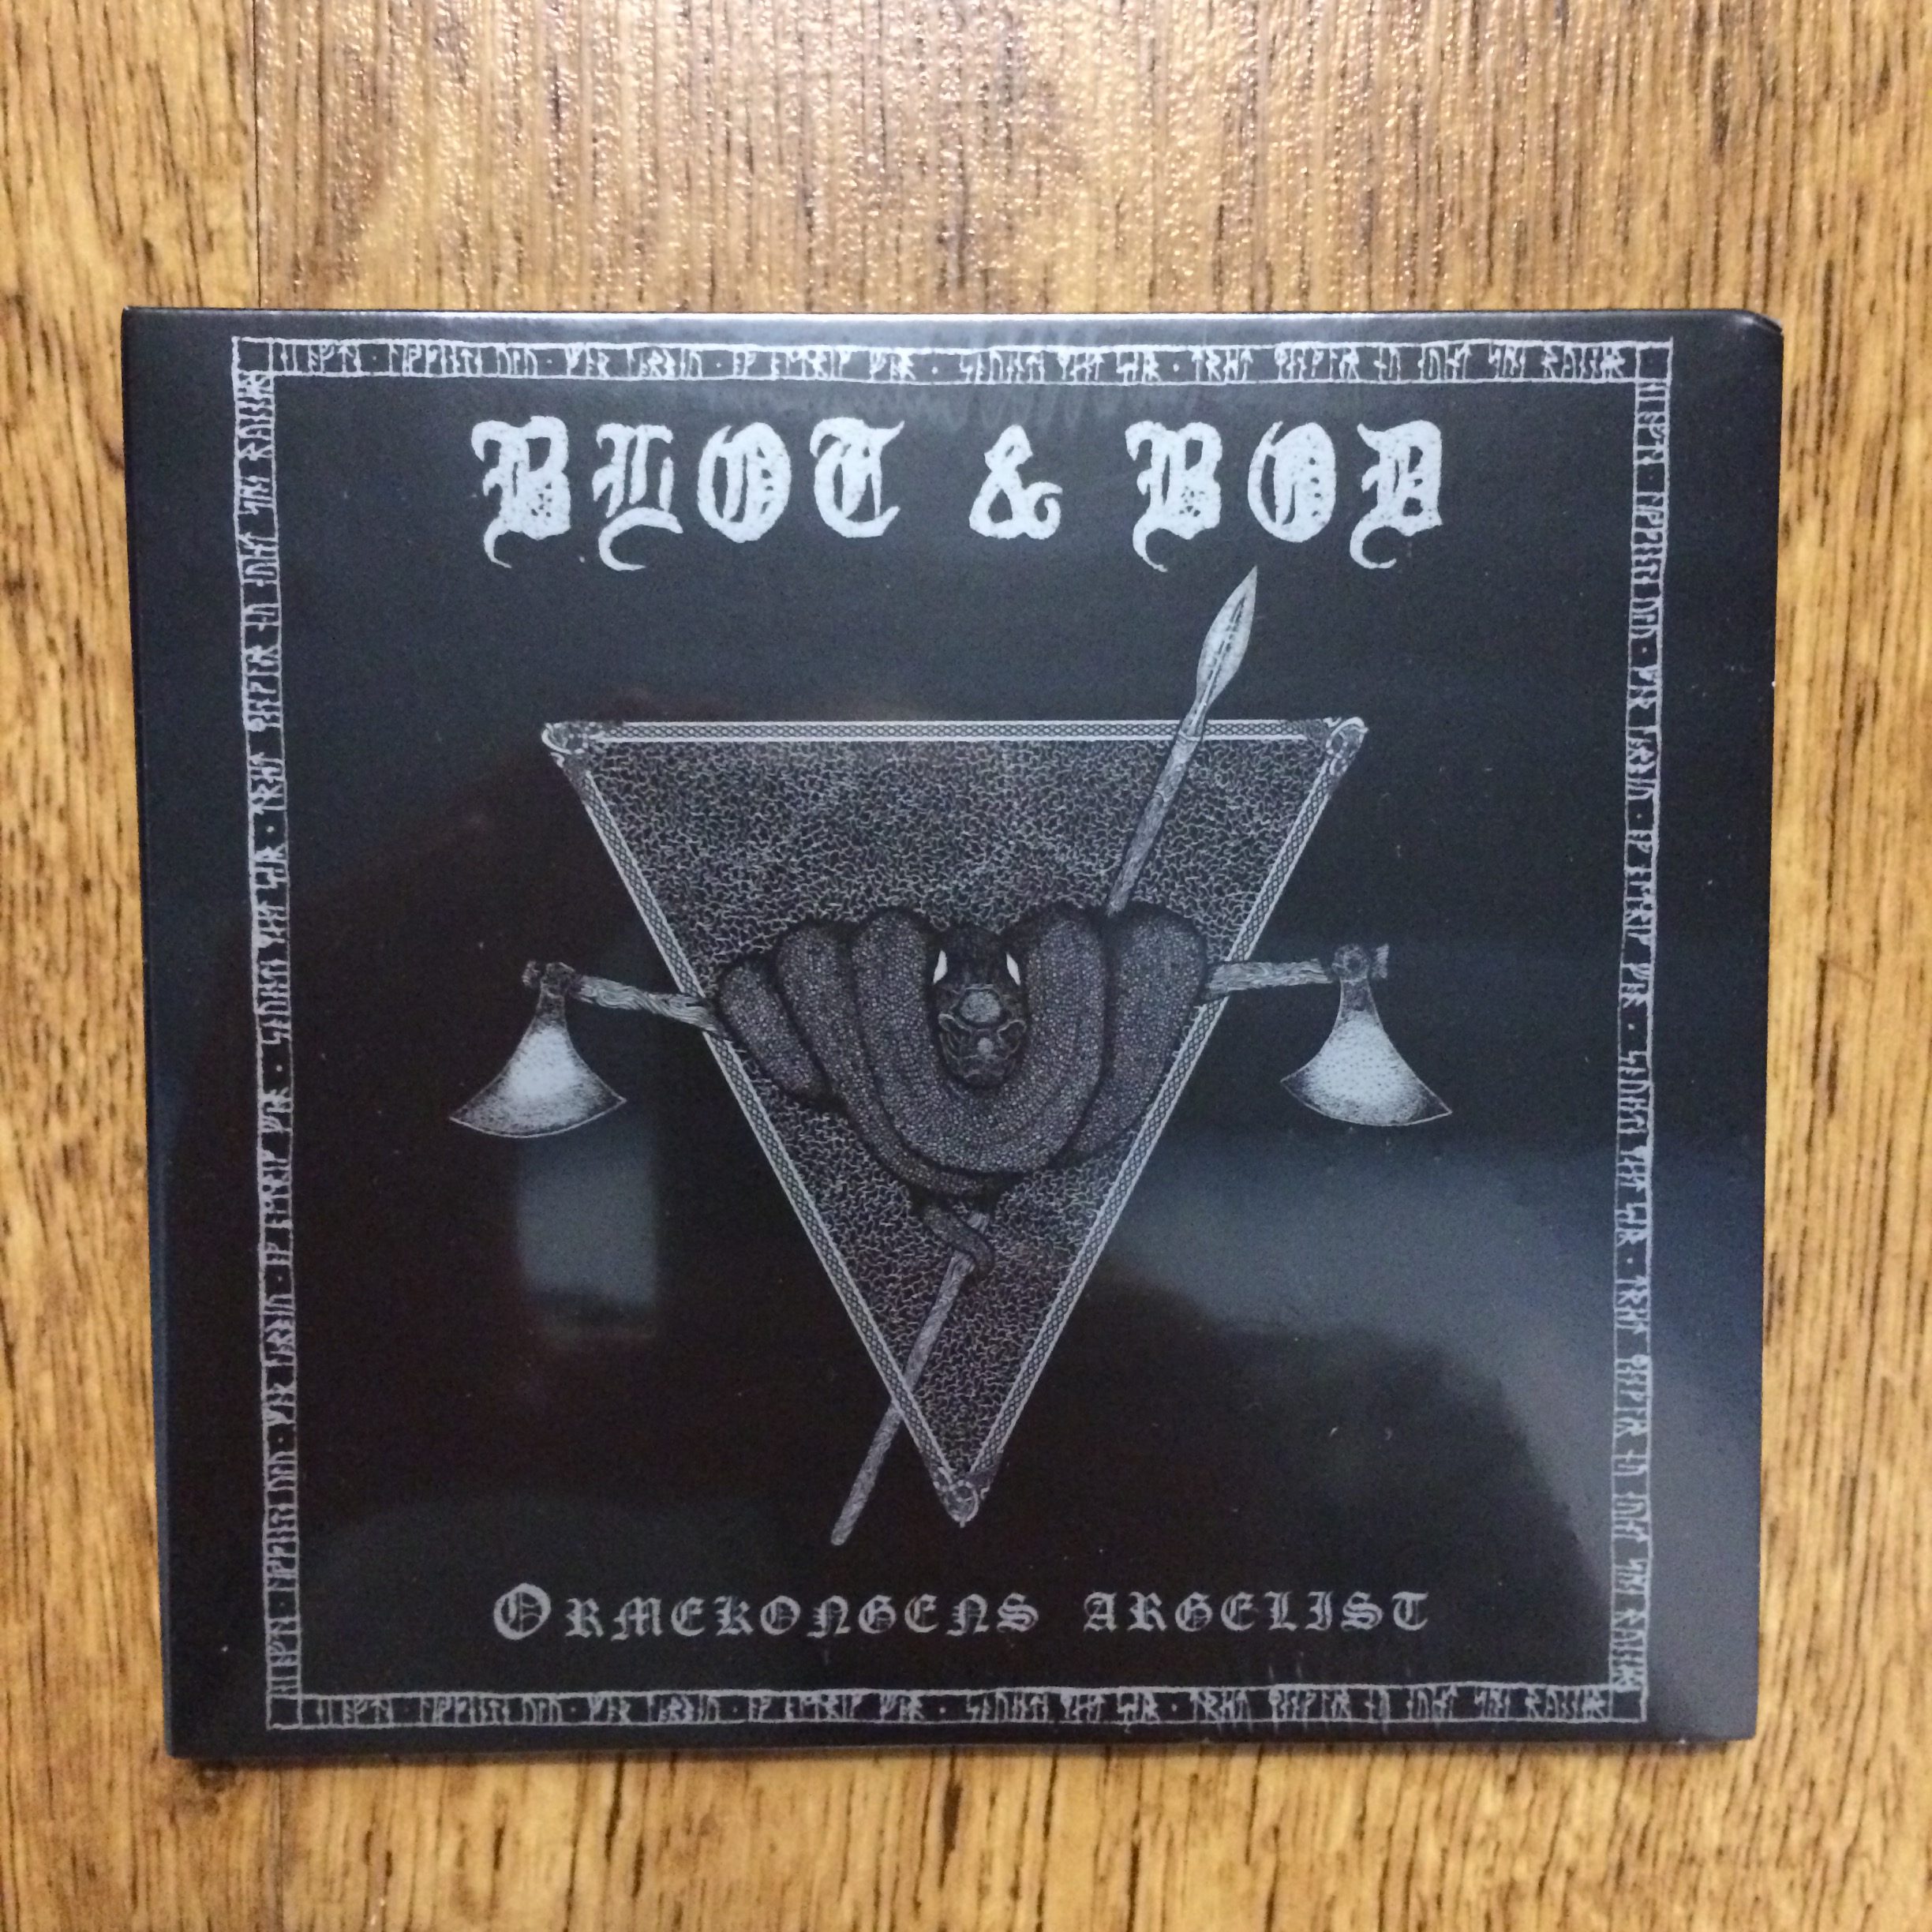 Photo of the Blot & Bod - "Ormekongens argelist" CD